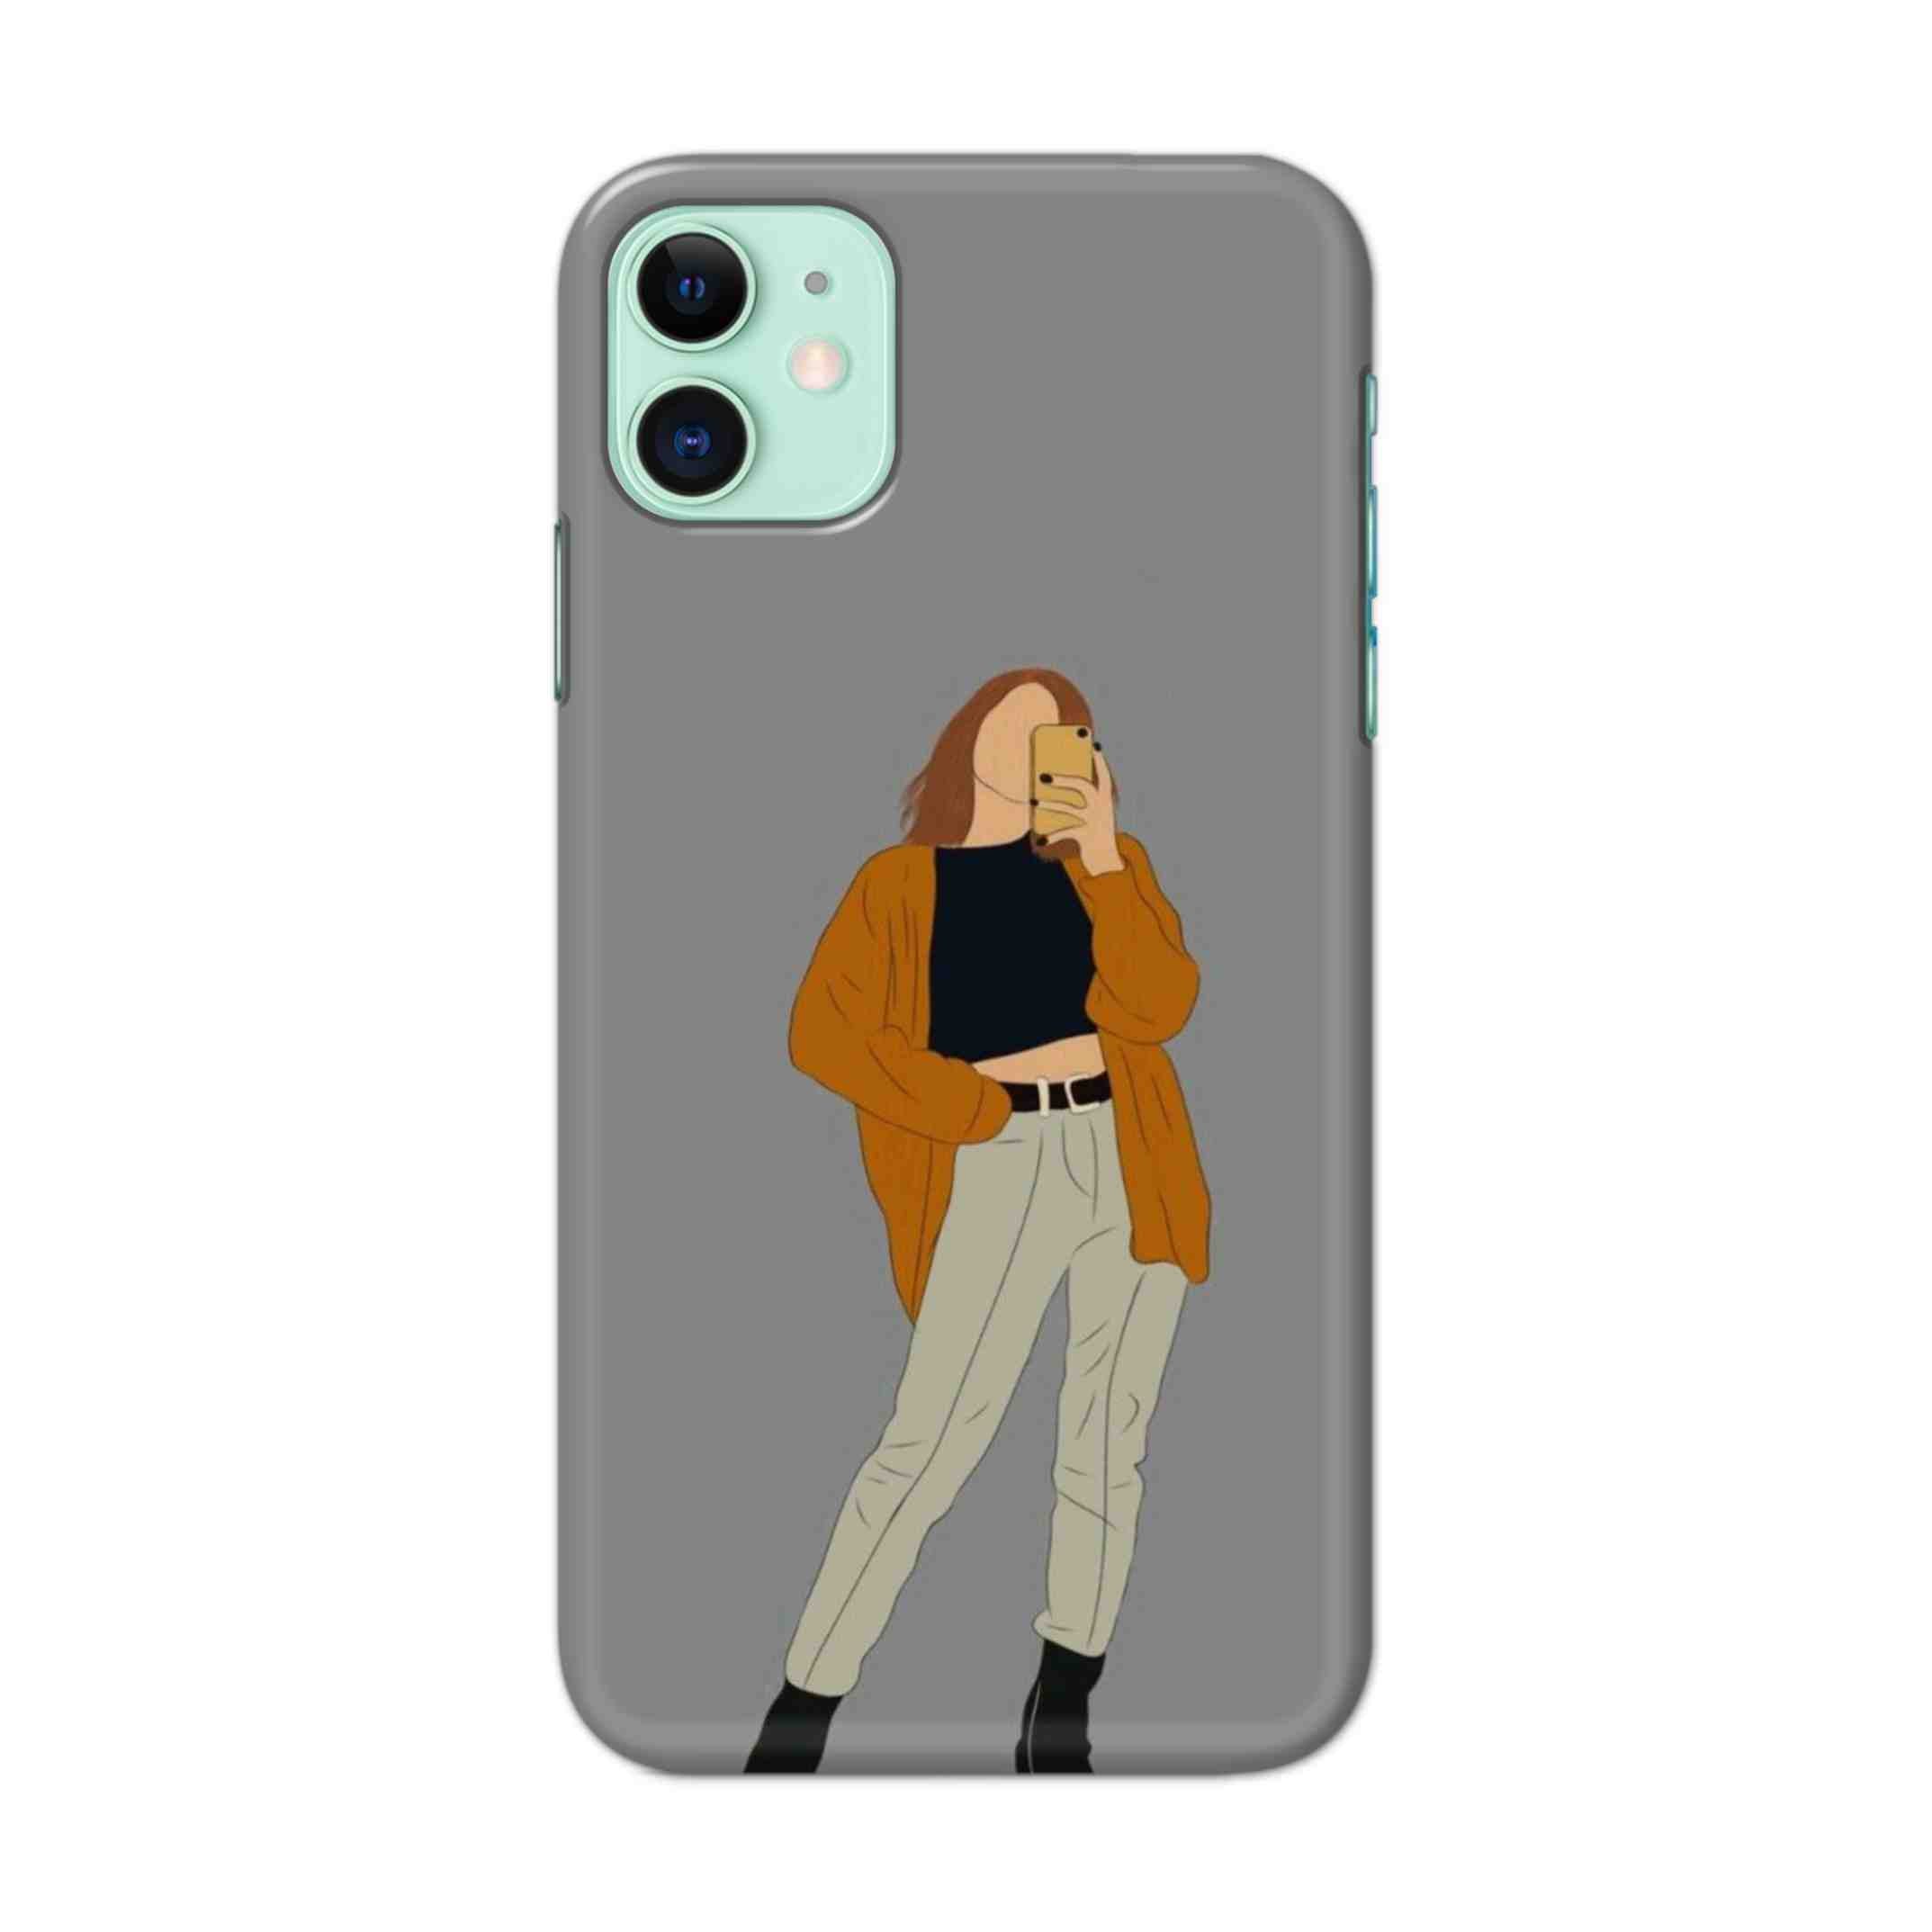 Buy Selfie Girl Hard Back Mobile Phone Case Cover For iPhone 11 Online